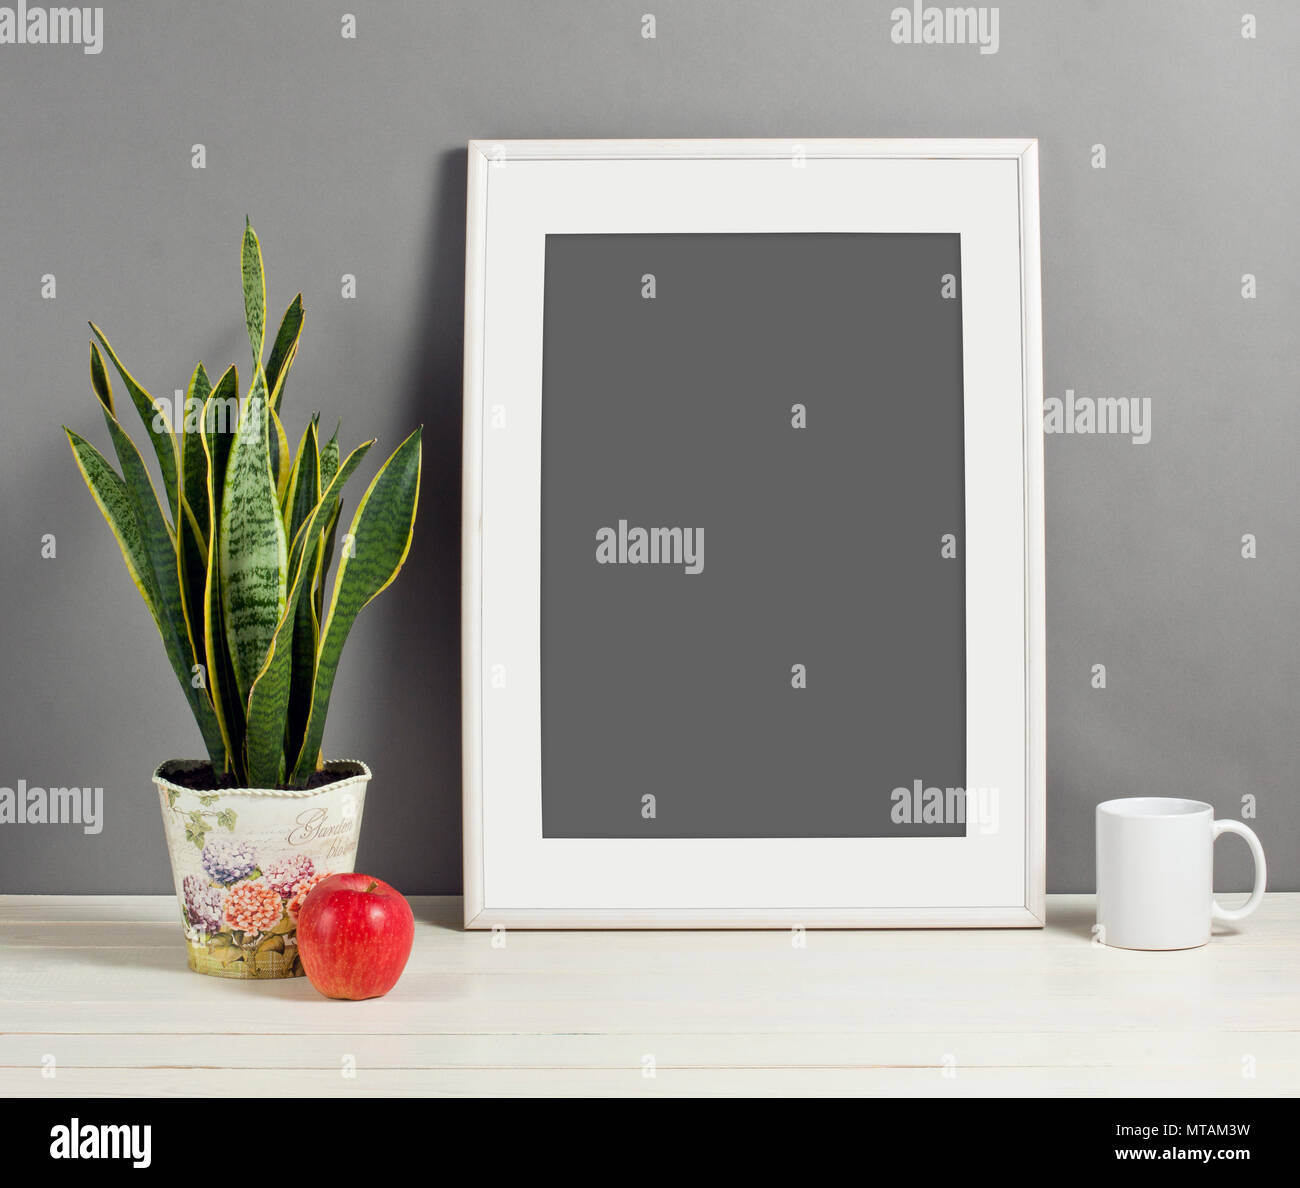 Download White Frame Mockup With Plant Pot Mug And Apple On Wooden Shelf Empty Frame Mock Up For Presentation Design Template Framing For Modern Art Stock Photo Alamy Yellowimages Mockups